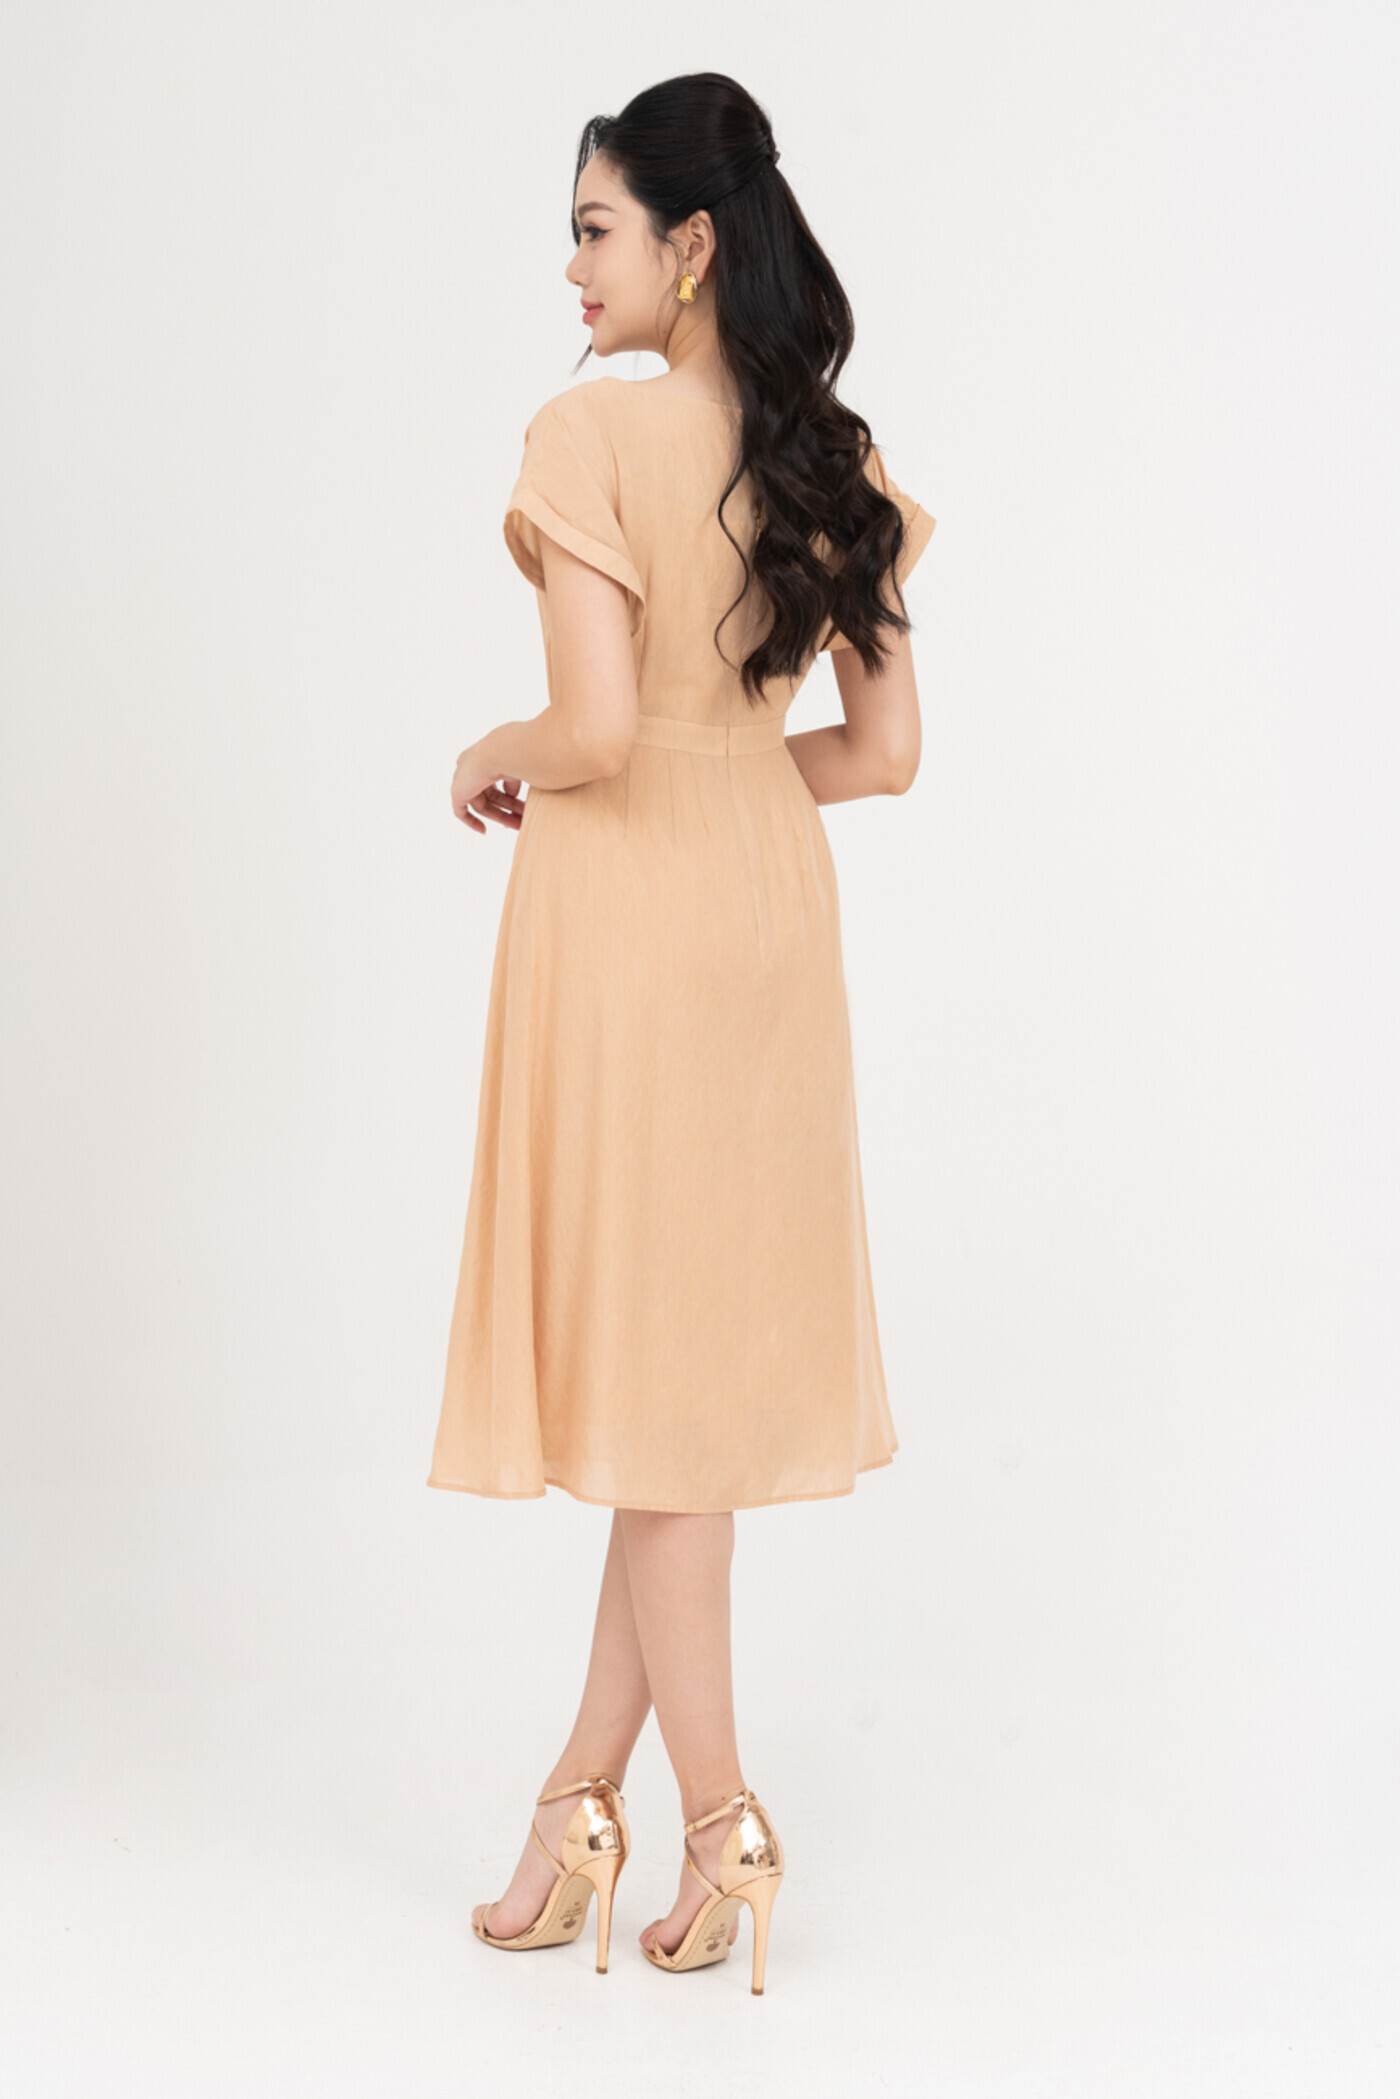 Azalea Dress - Đầm dệt hoa nghệ thuật 